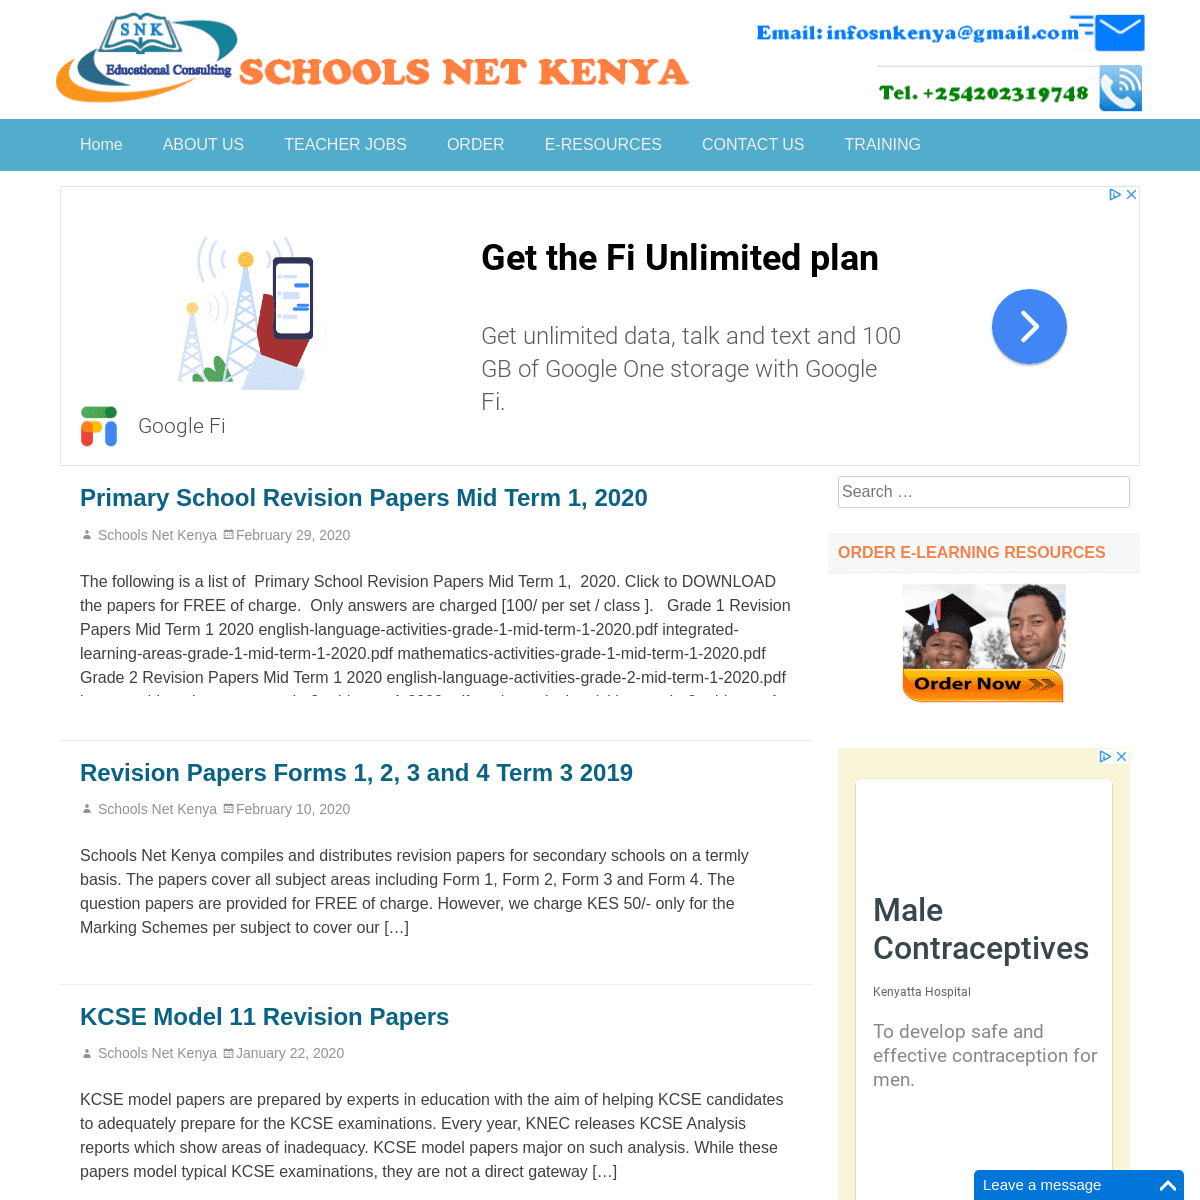 A complete backup of schoolsnetkenya.com